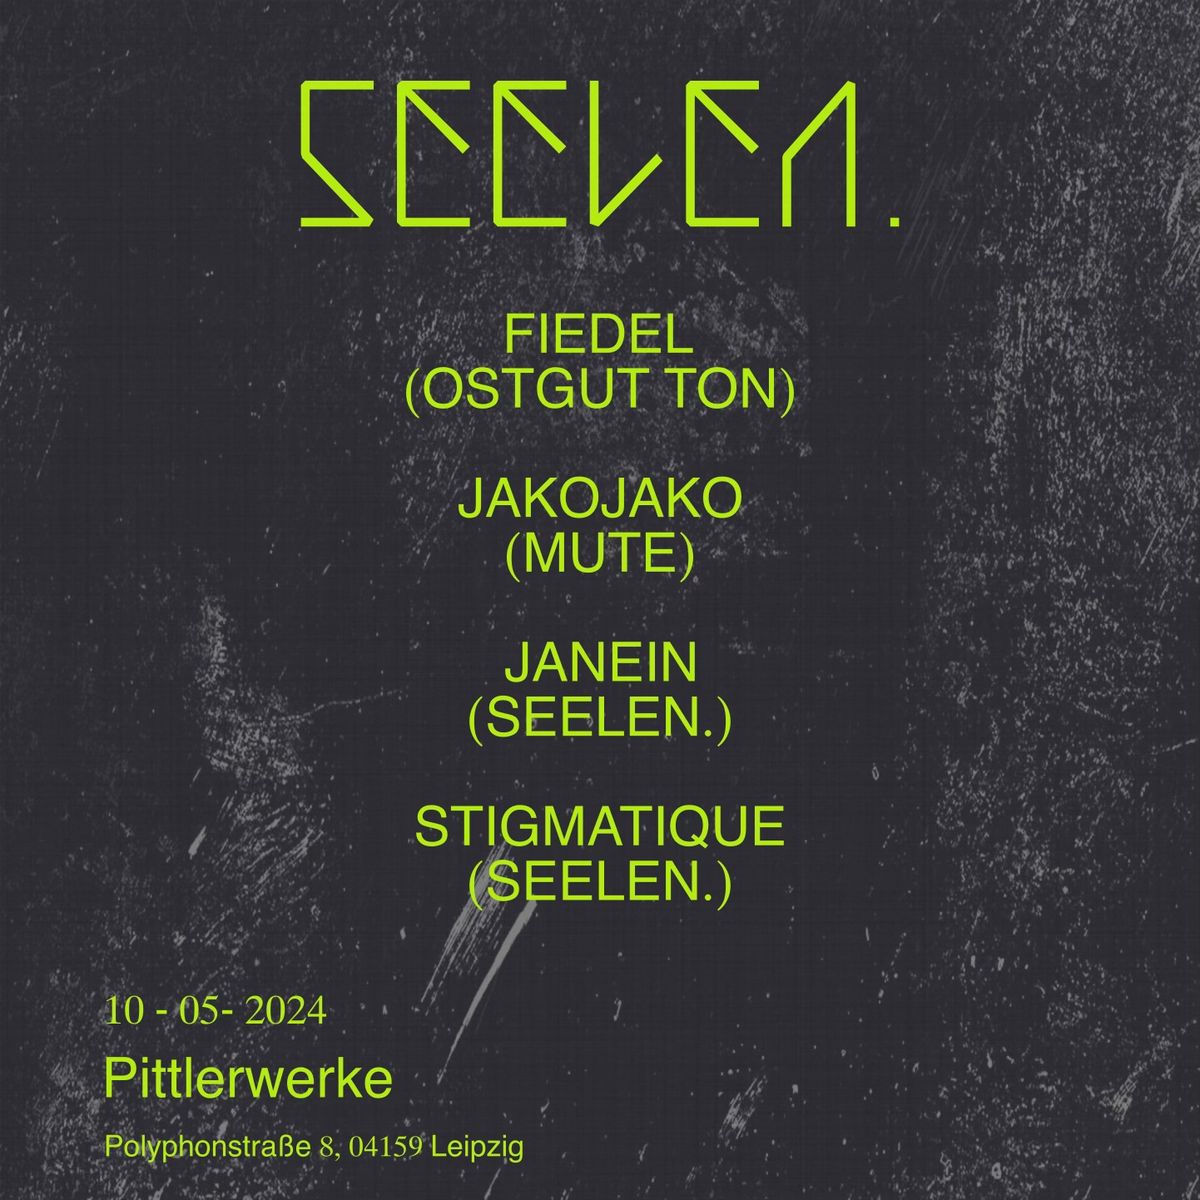 SEELEN. Records Labelnight with JakoJako and Fiedel at Pittlerwerke, Leipzig